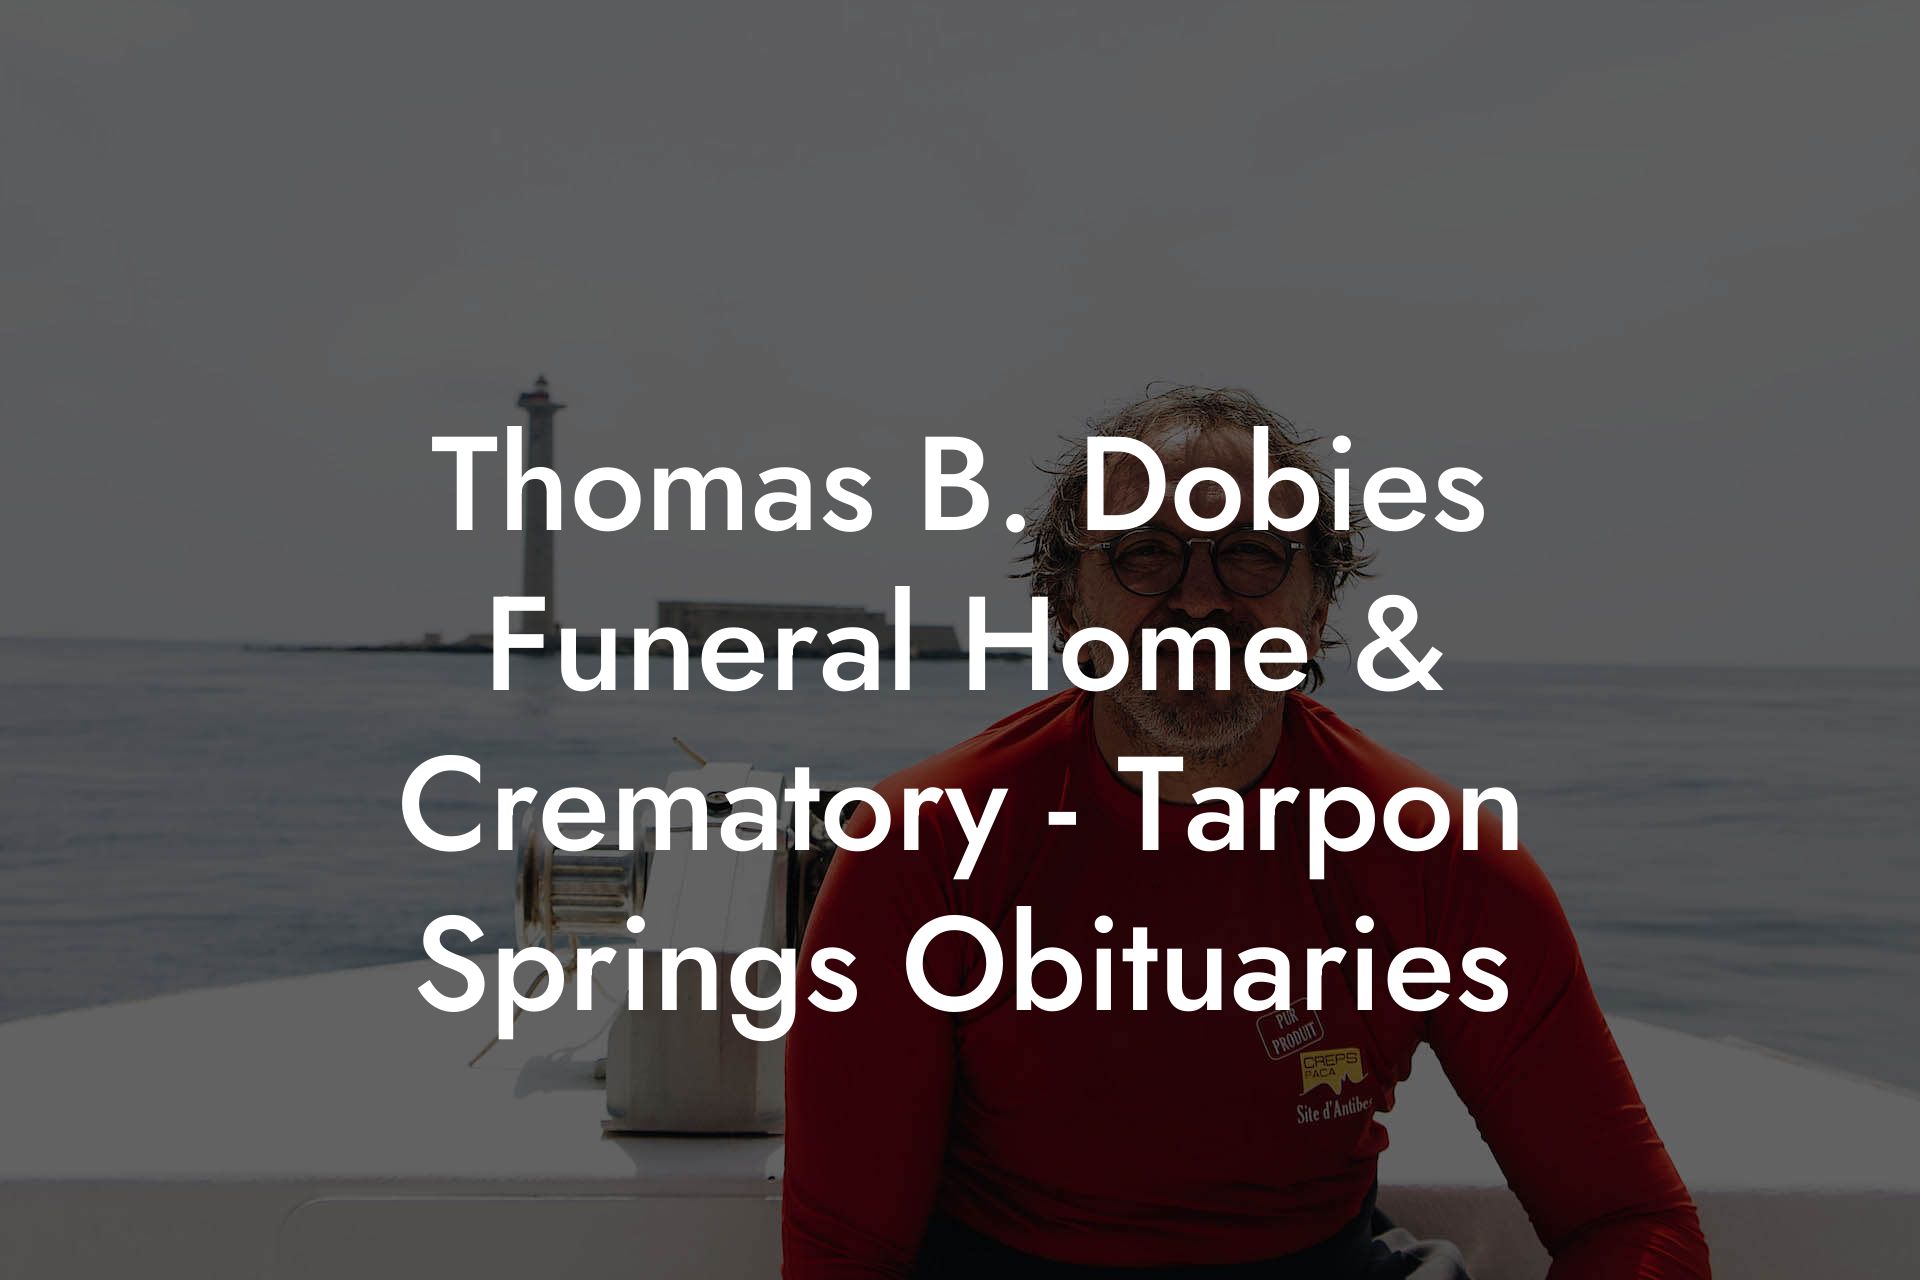 Thomas B. Dobies Funeral Home & Crematory - Tarpon Springs Obituaries